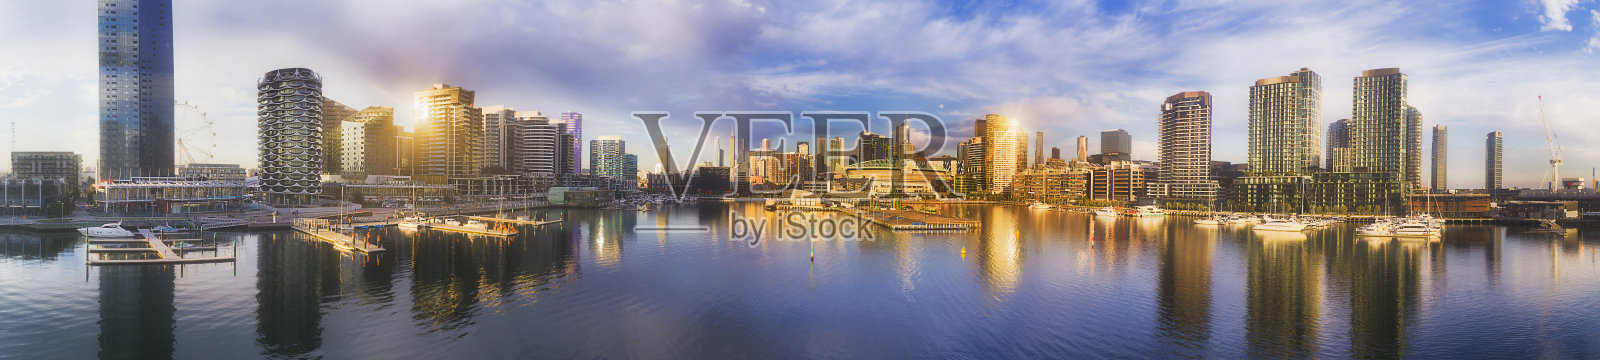 D Me Docklands低全景照片摄影图片